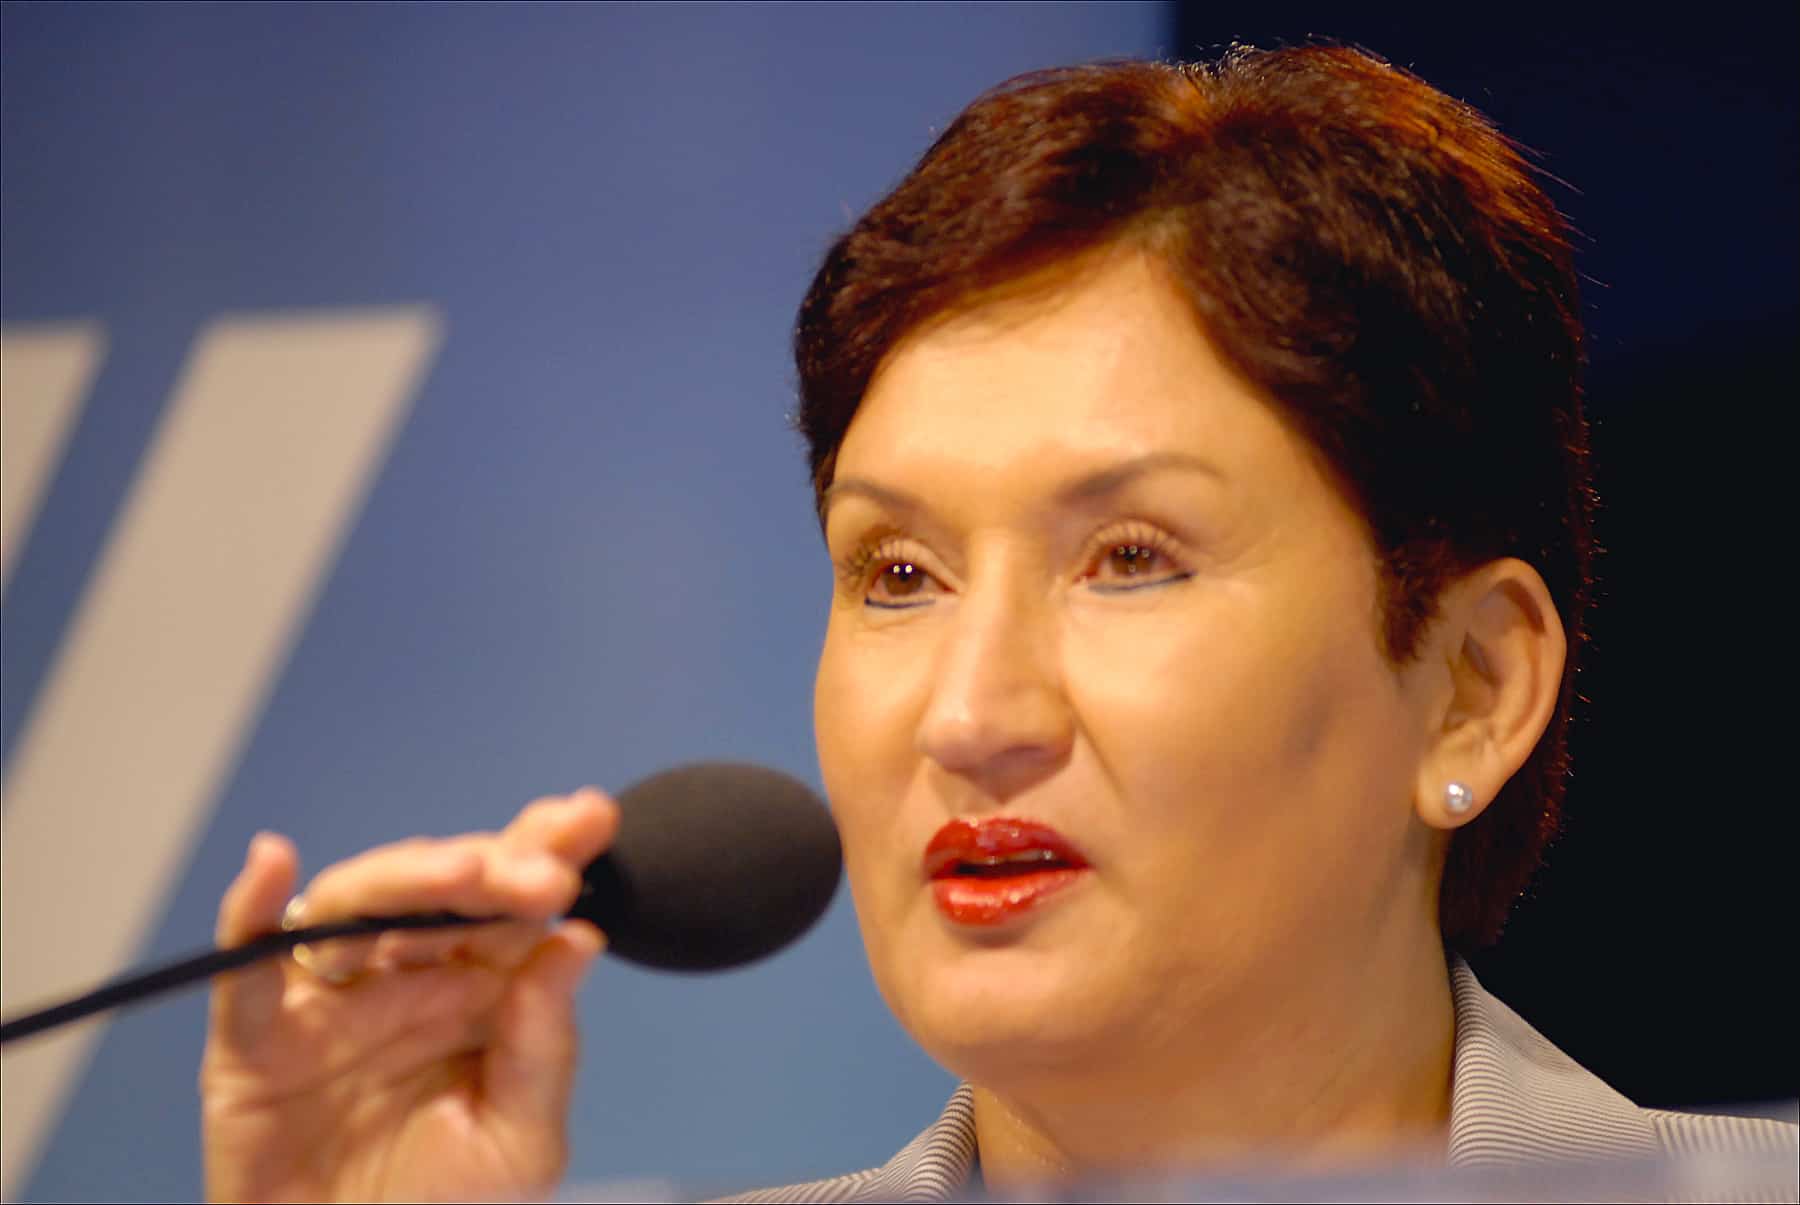 Guatemala top prosecutor Thelma Aldana